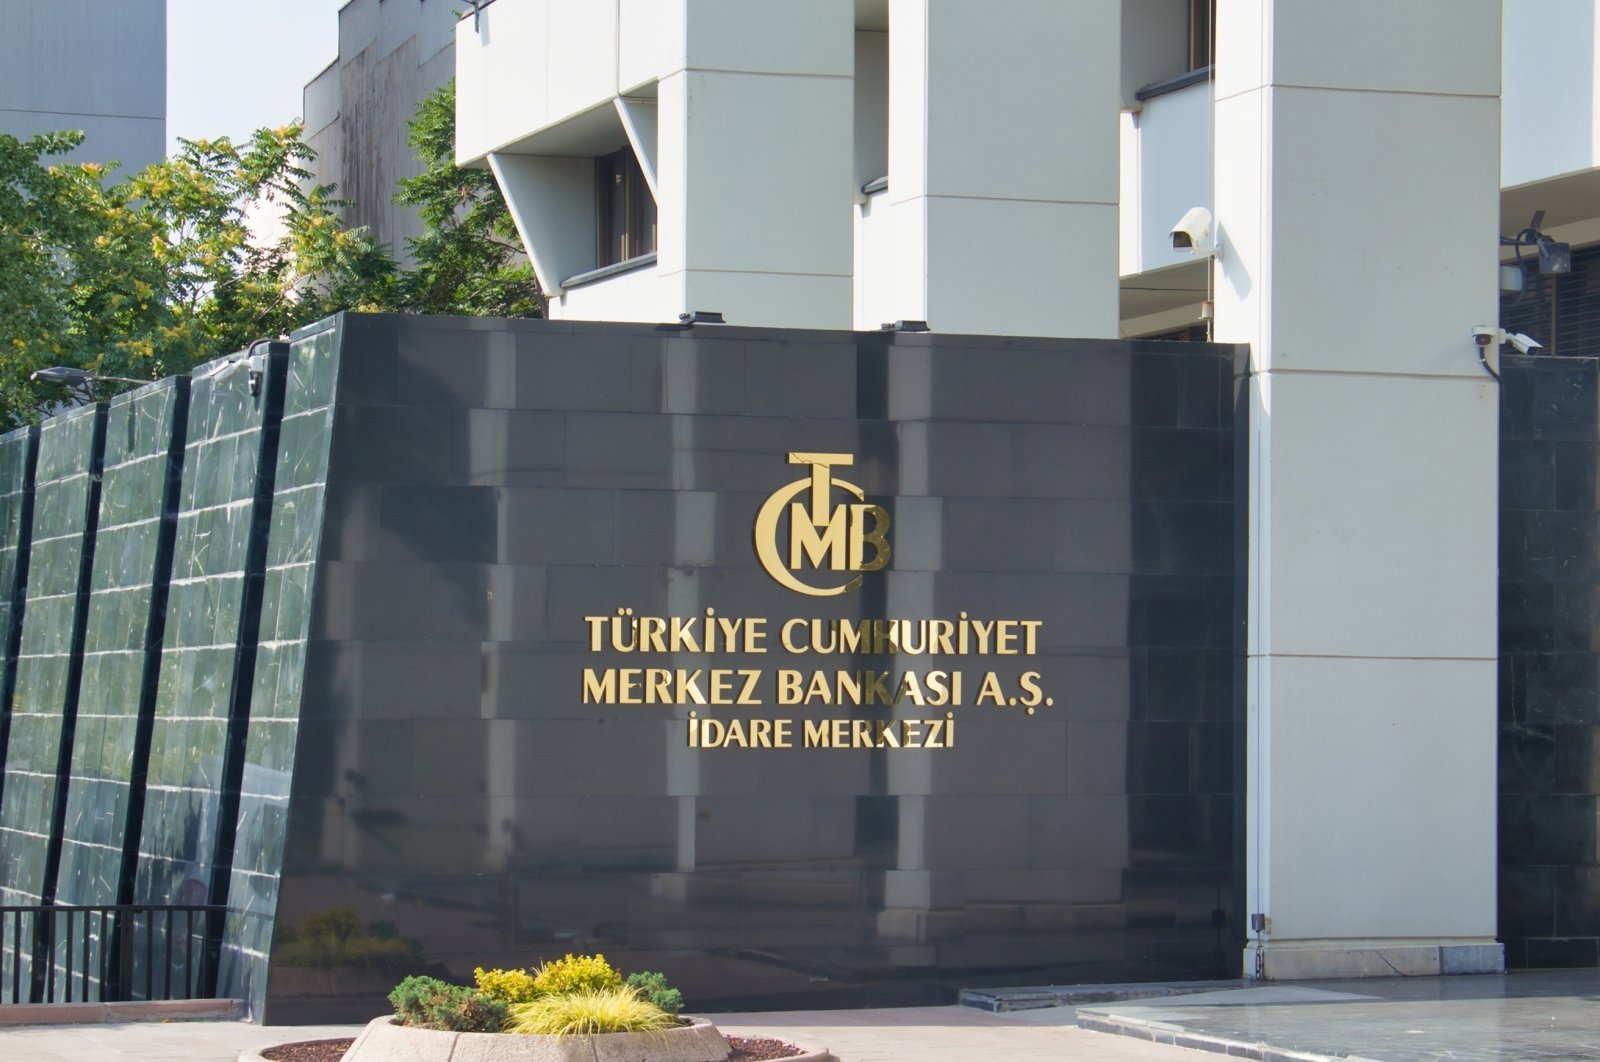 The Central Bank of the Republic of Turkey's (CBRT) branch in Izmir, western Turkey, Aug. 15, 2019. (Shutterstock Photo)